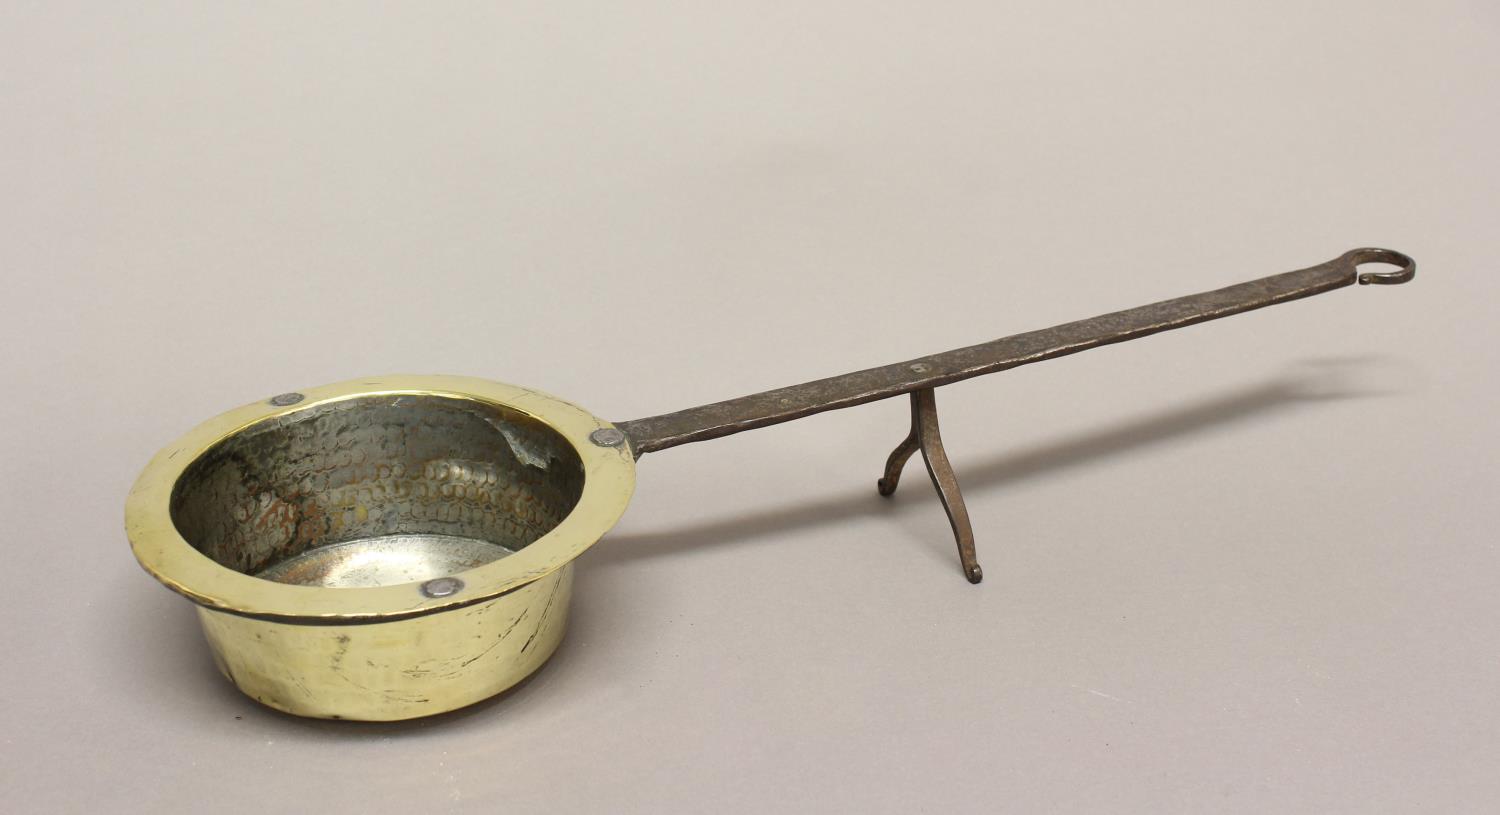 A LATE 18TH IRON AND BRASS DOWNHEARTH SAUCEPAN. A circular brass saucepan with a long iron handle